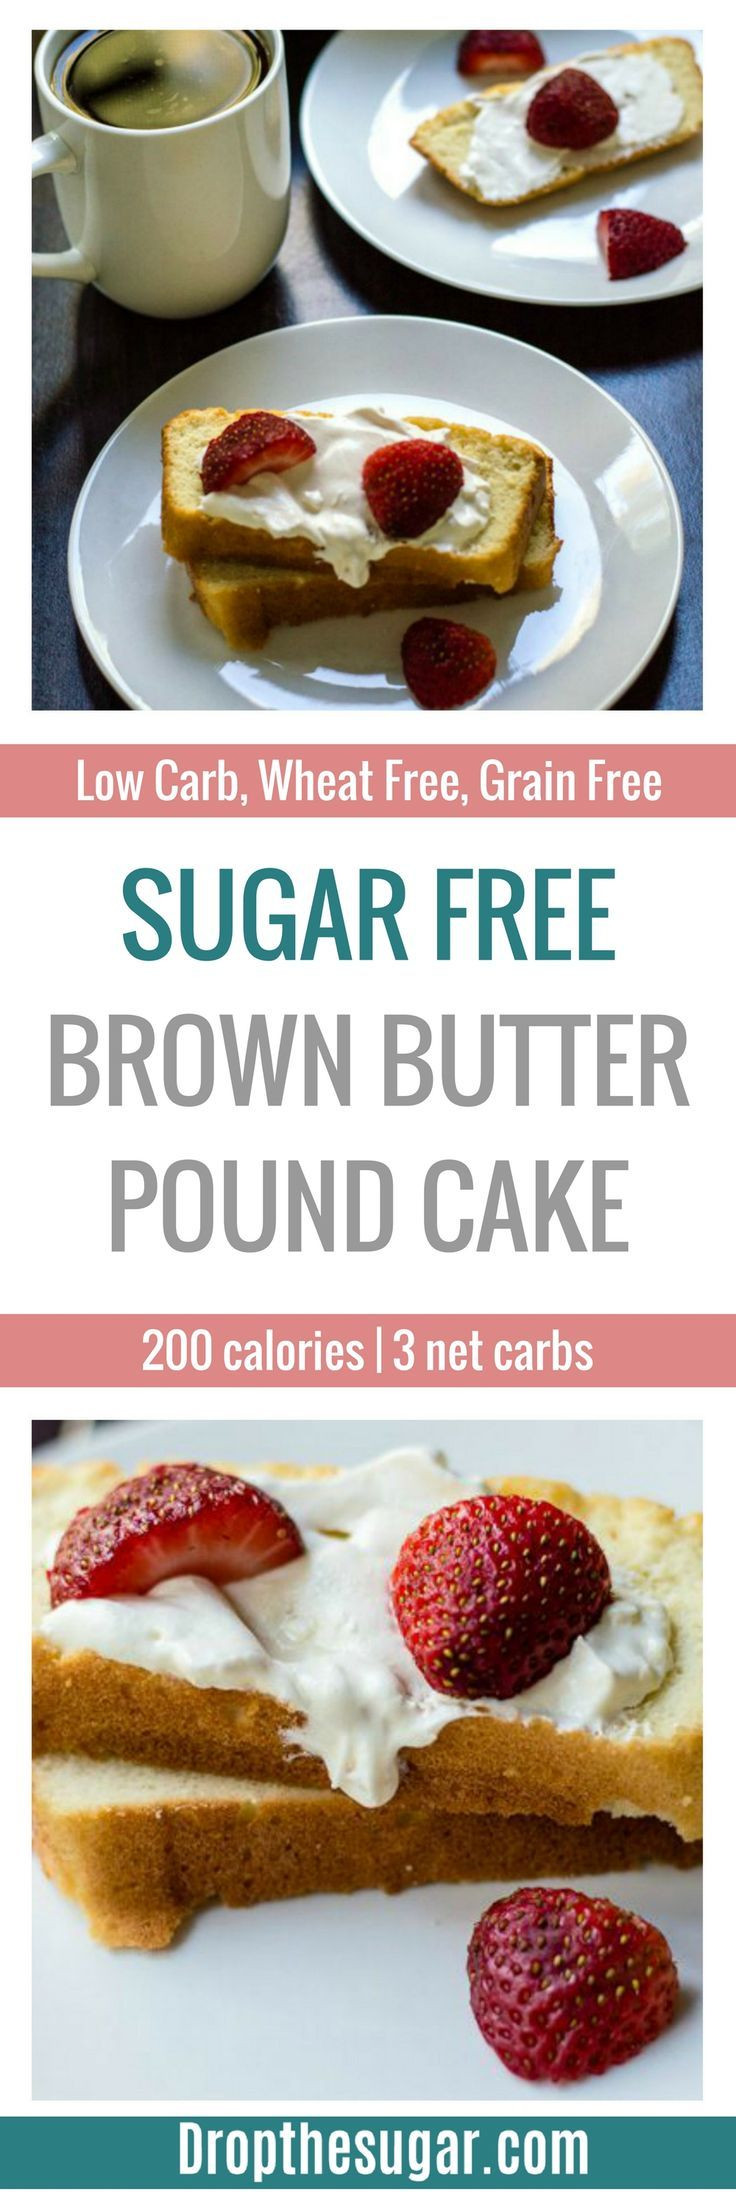 Sugar Free Pound Cake Recipes Diabetics
 Sugar Free Brown Butter Pound Cake